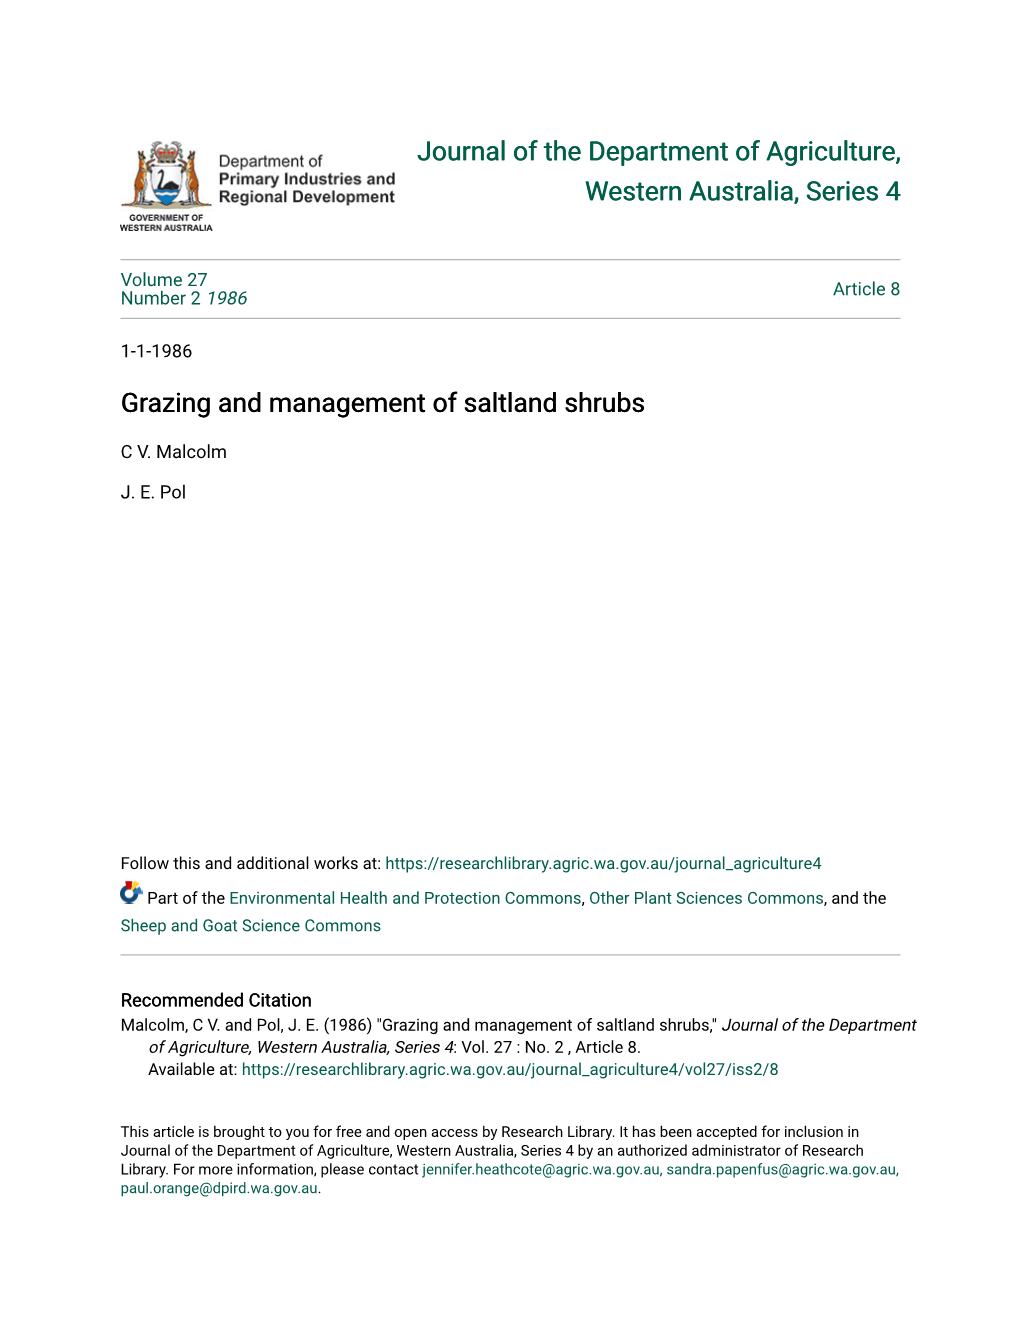 Grazing and Management of Saltland Shrubs